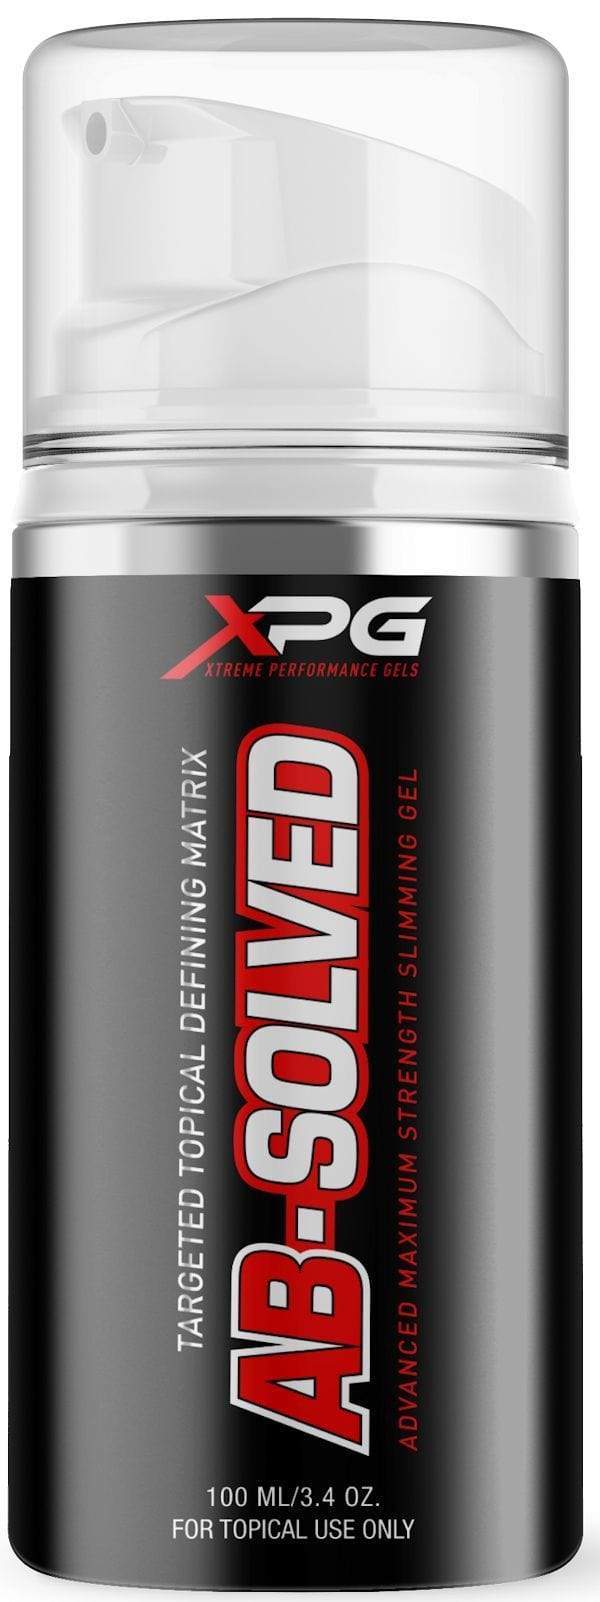 XPG Xtreme Performance Gels AB-Solved Fat Burner